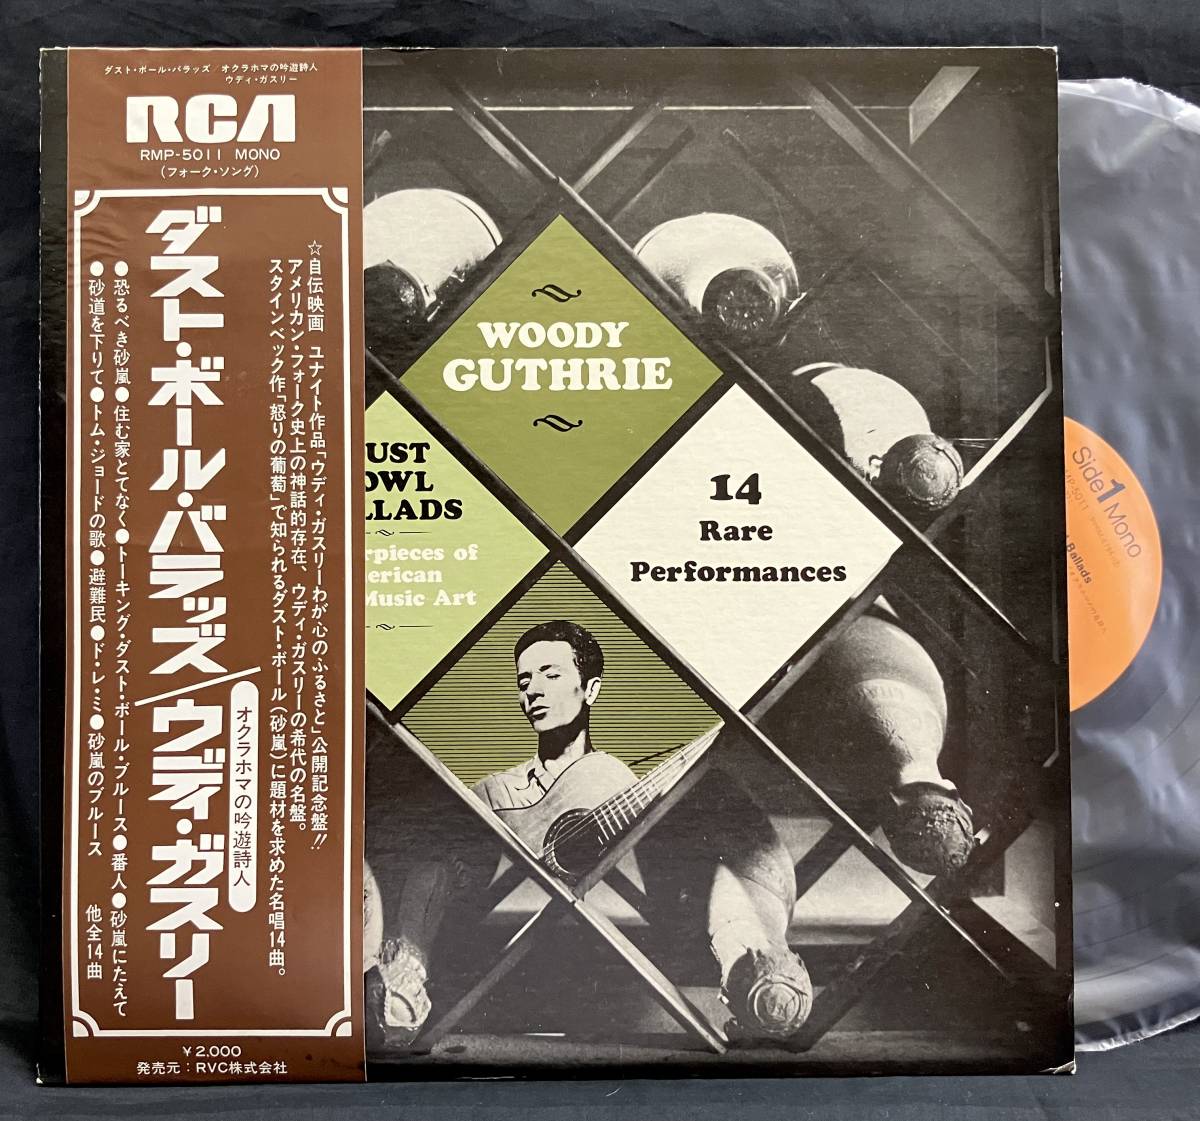 LP[Dust Bowl Ballads пыль * мяч * роза z]Woody Guthrie( ude .* газ Lee )